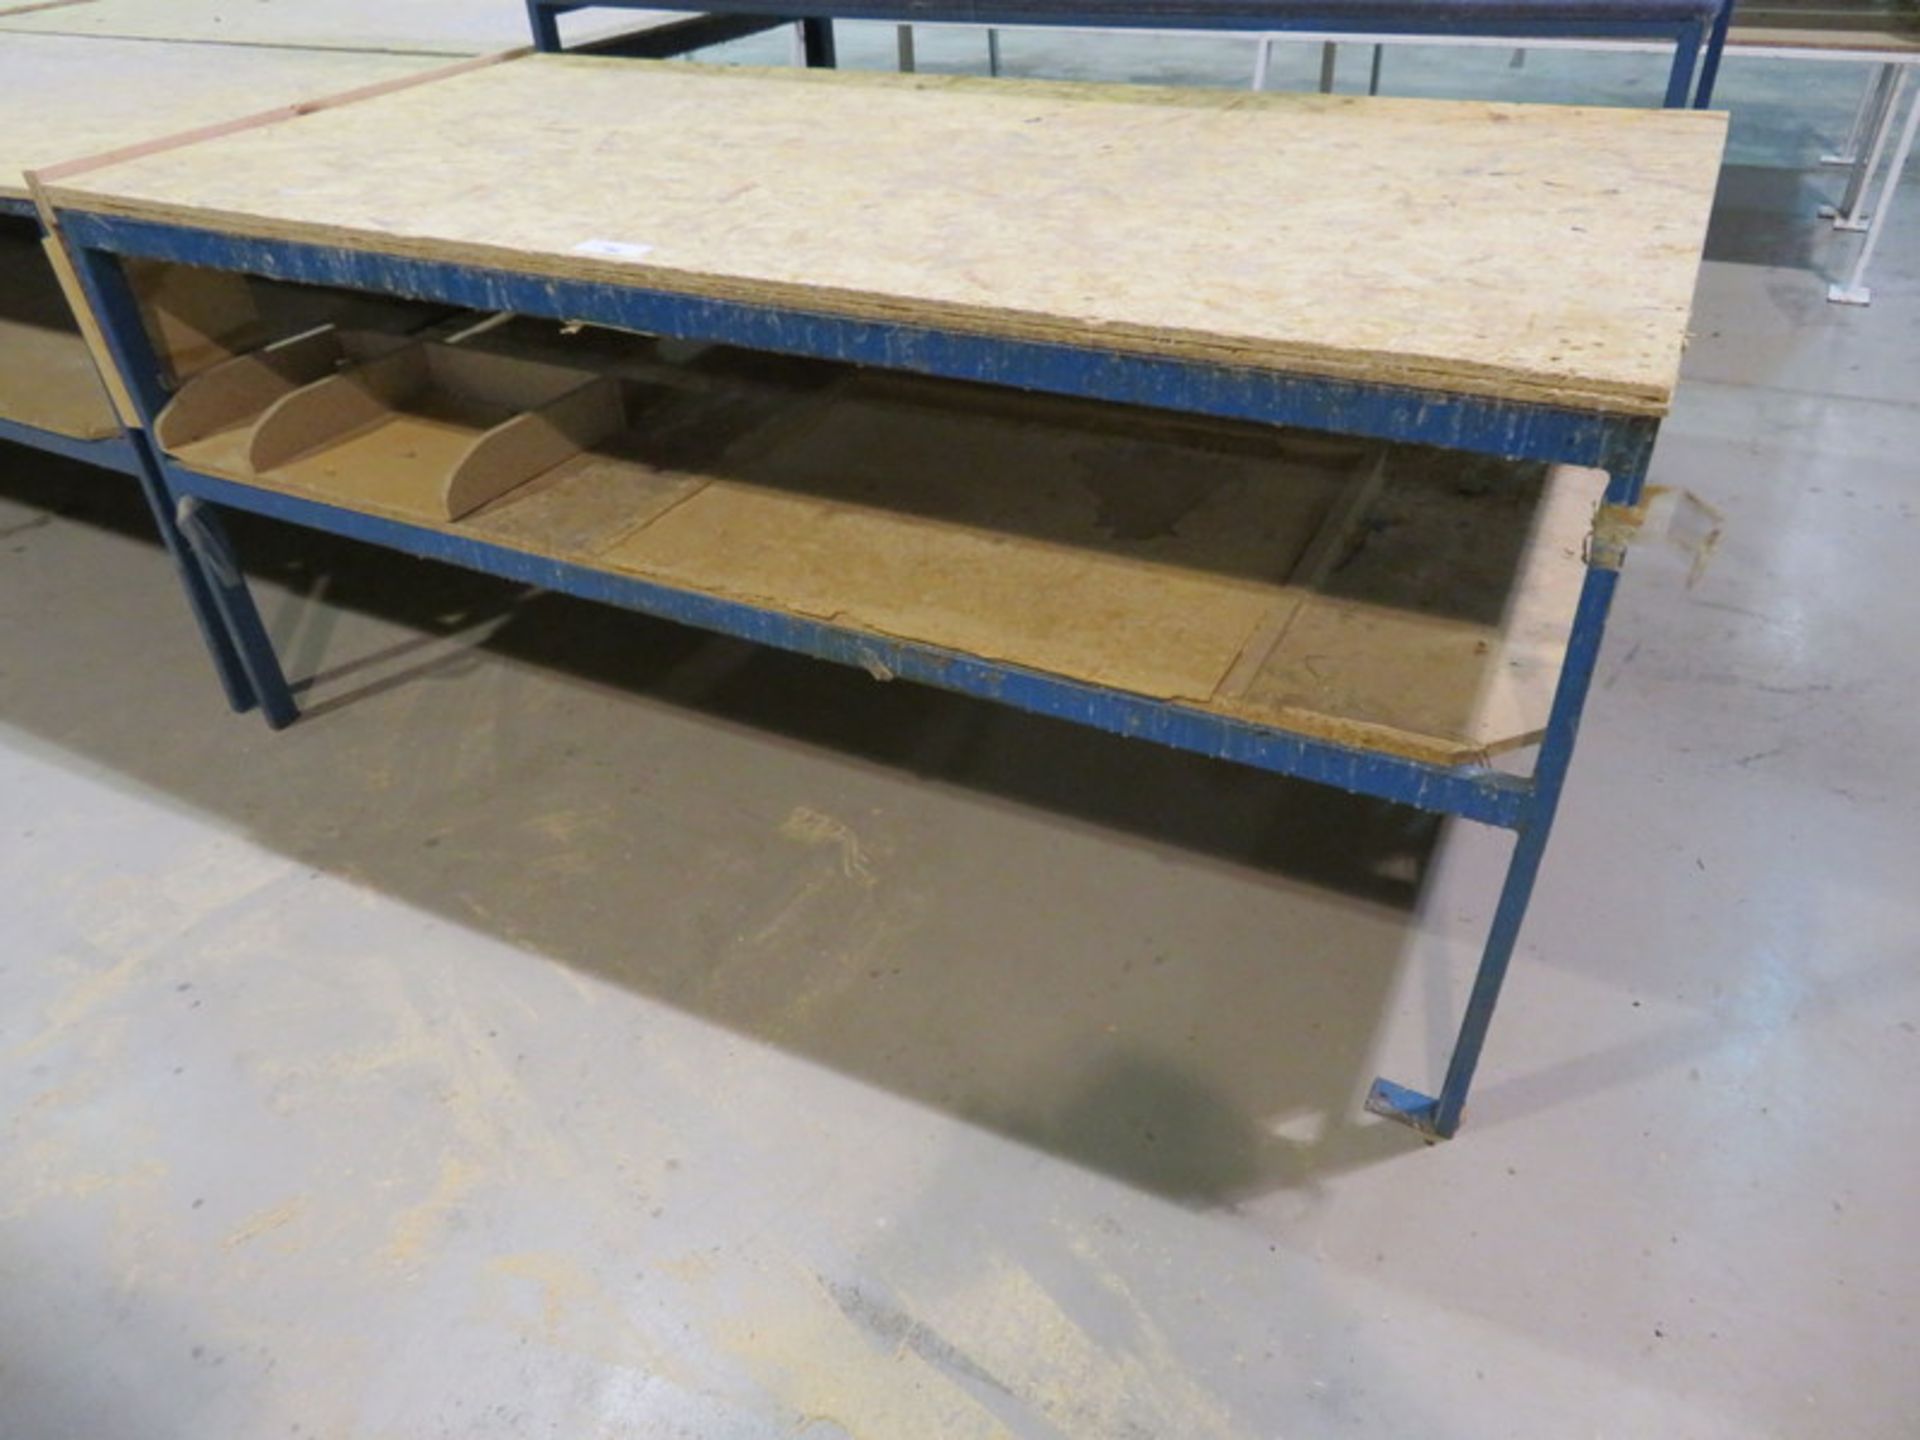 Metal frame wooden top work bench - 2000 x 1000 x 880mm (LxDxH)